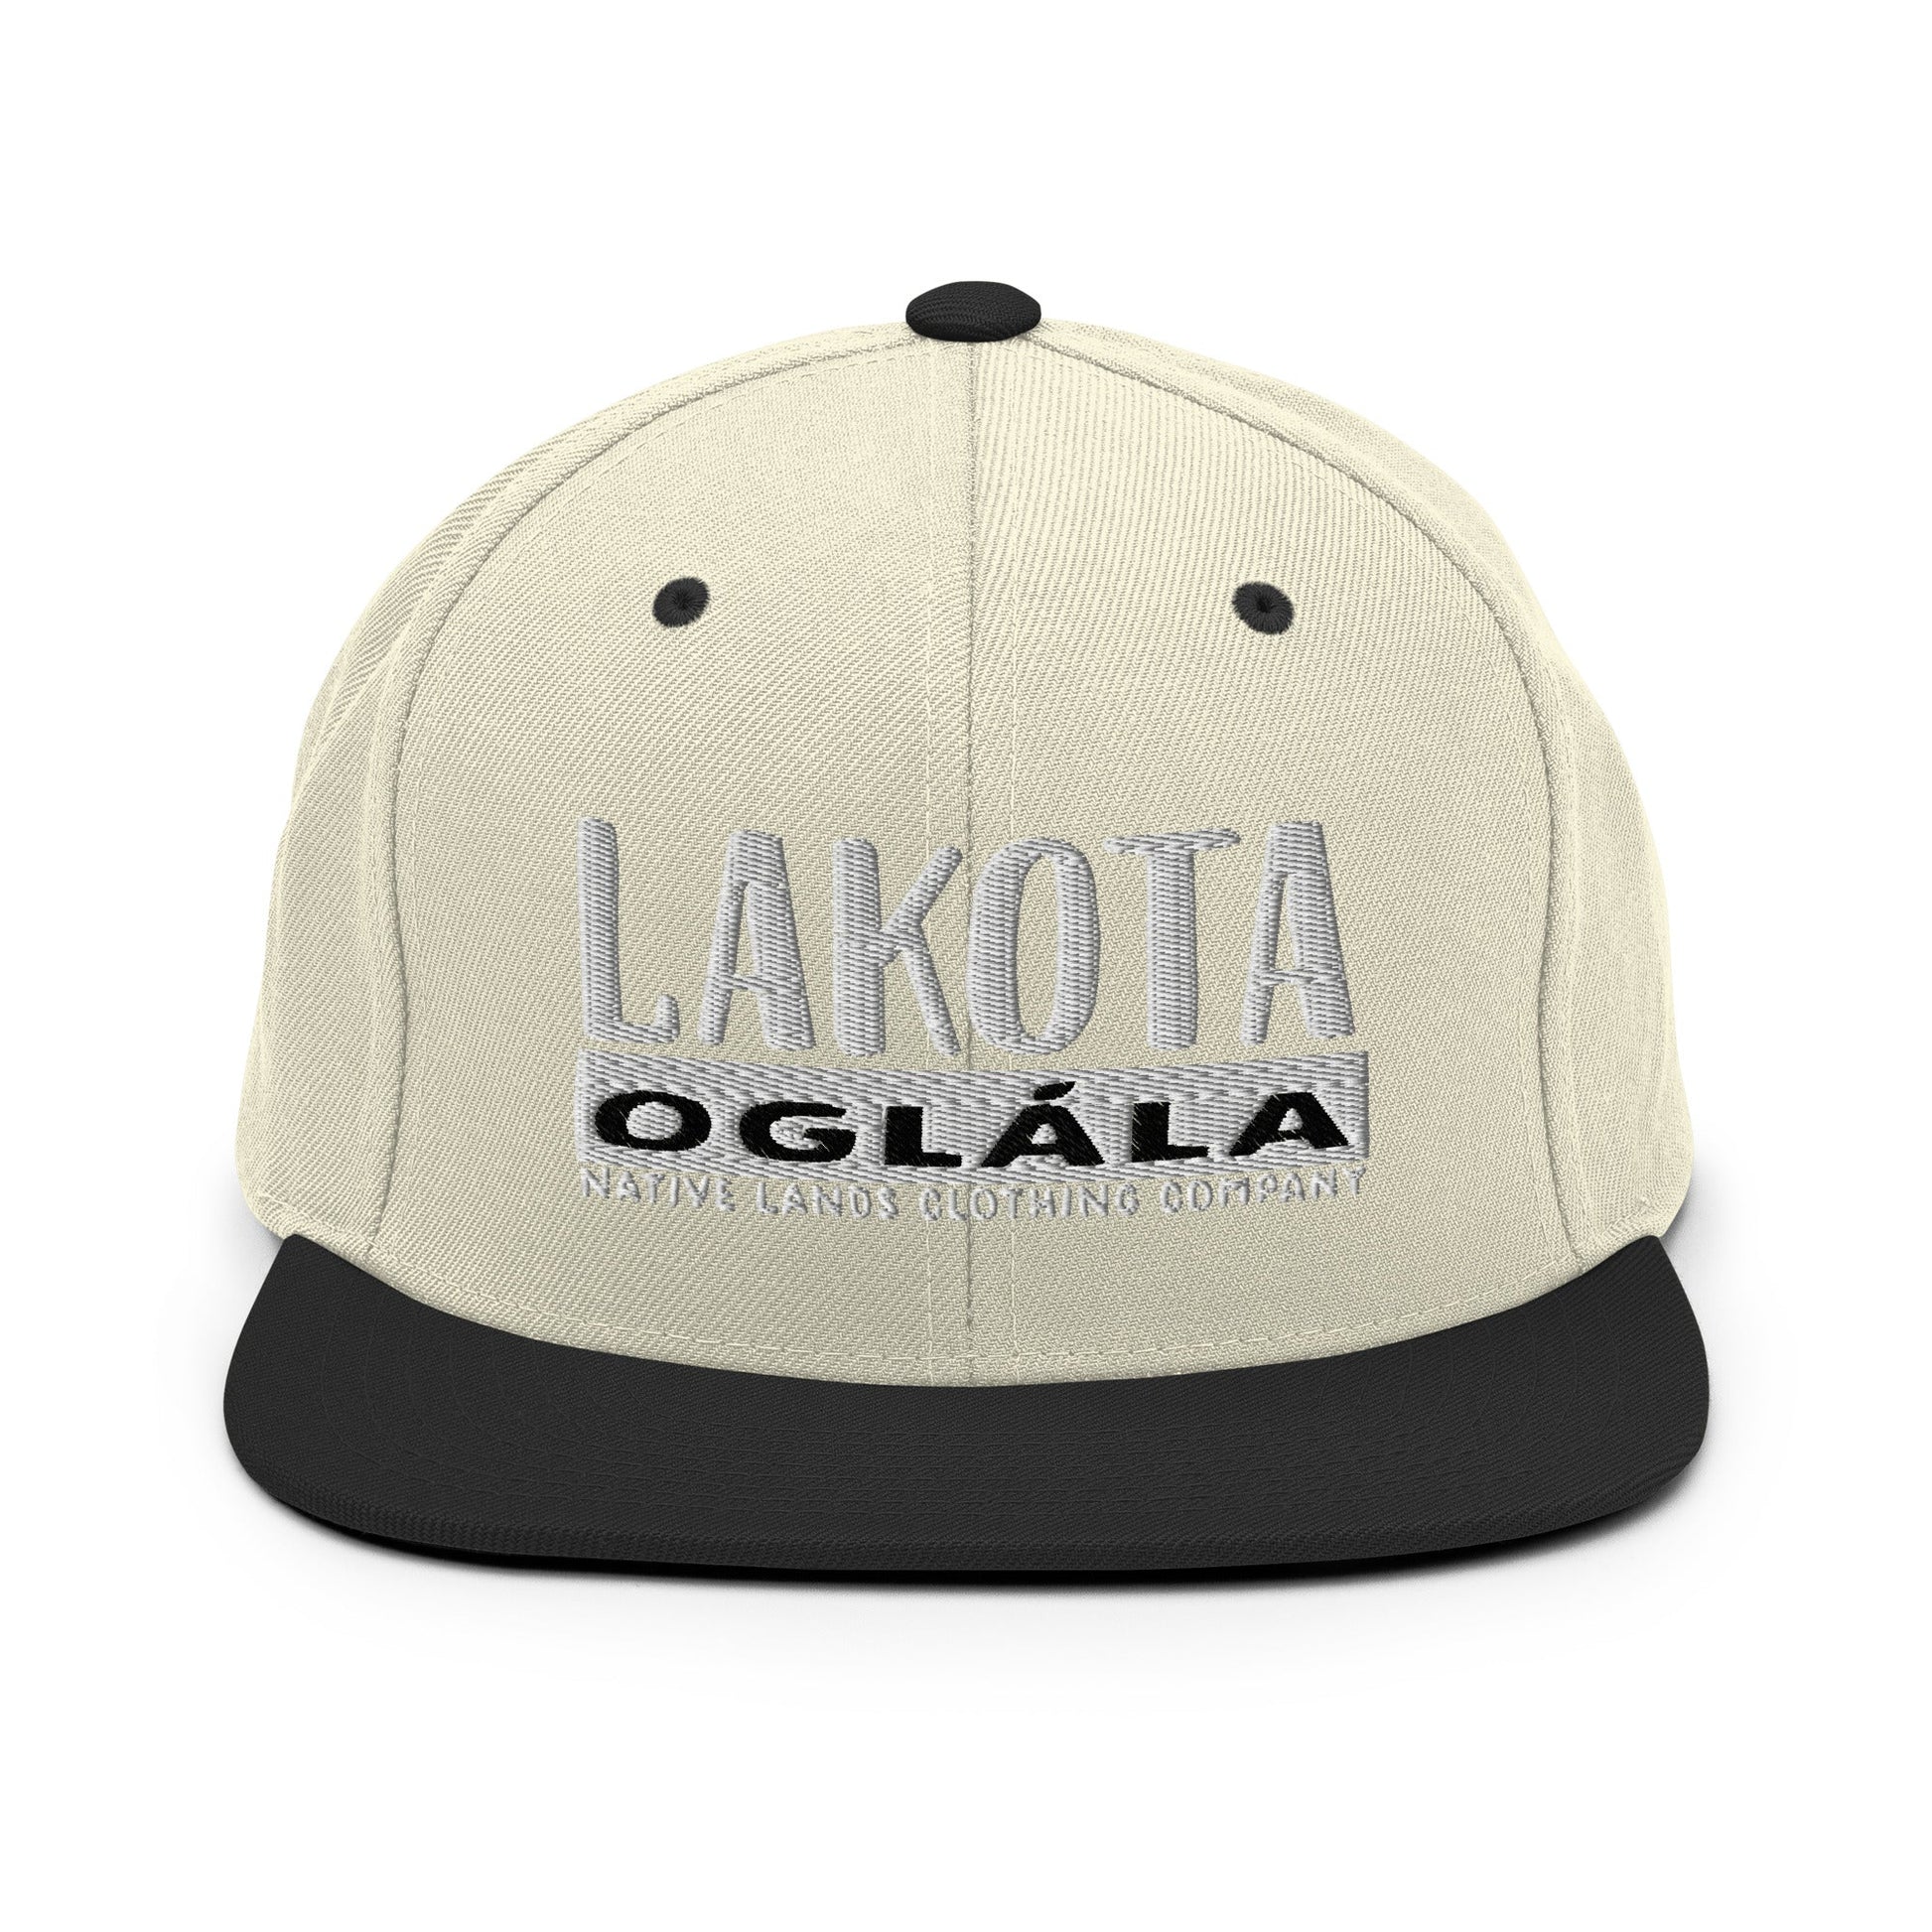 Lakota Oglala Snapback Hat Embroidered Native American Native Lands Clothing Company